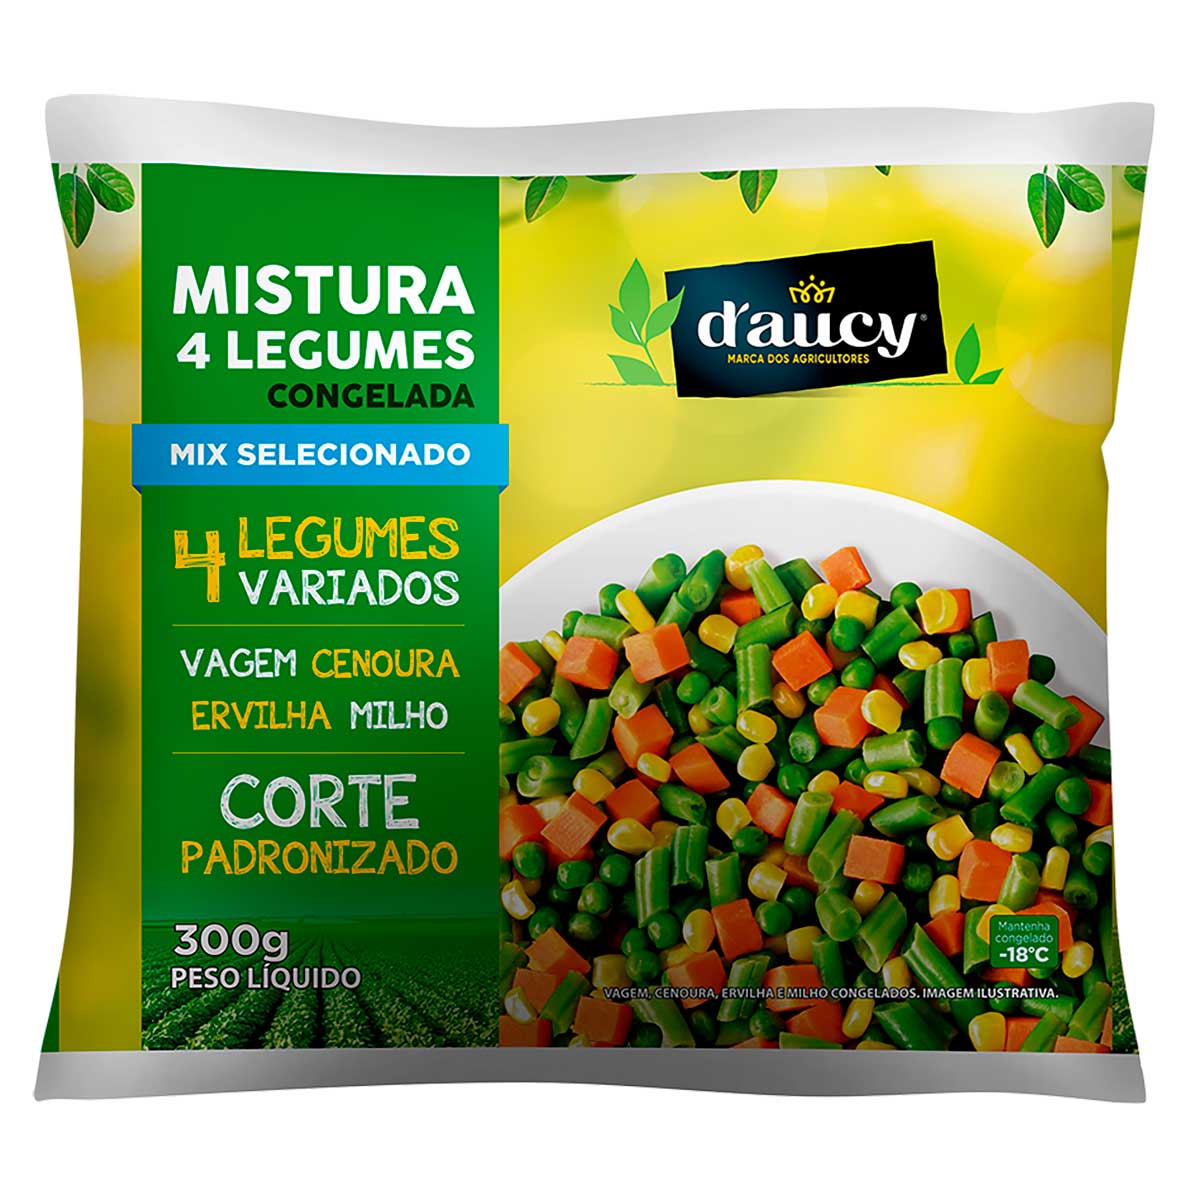 mix-de-legumes-congelado-daucy-300g-1.jpg